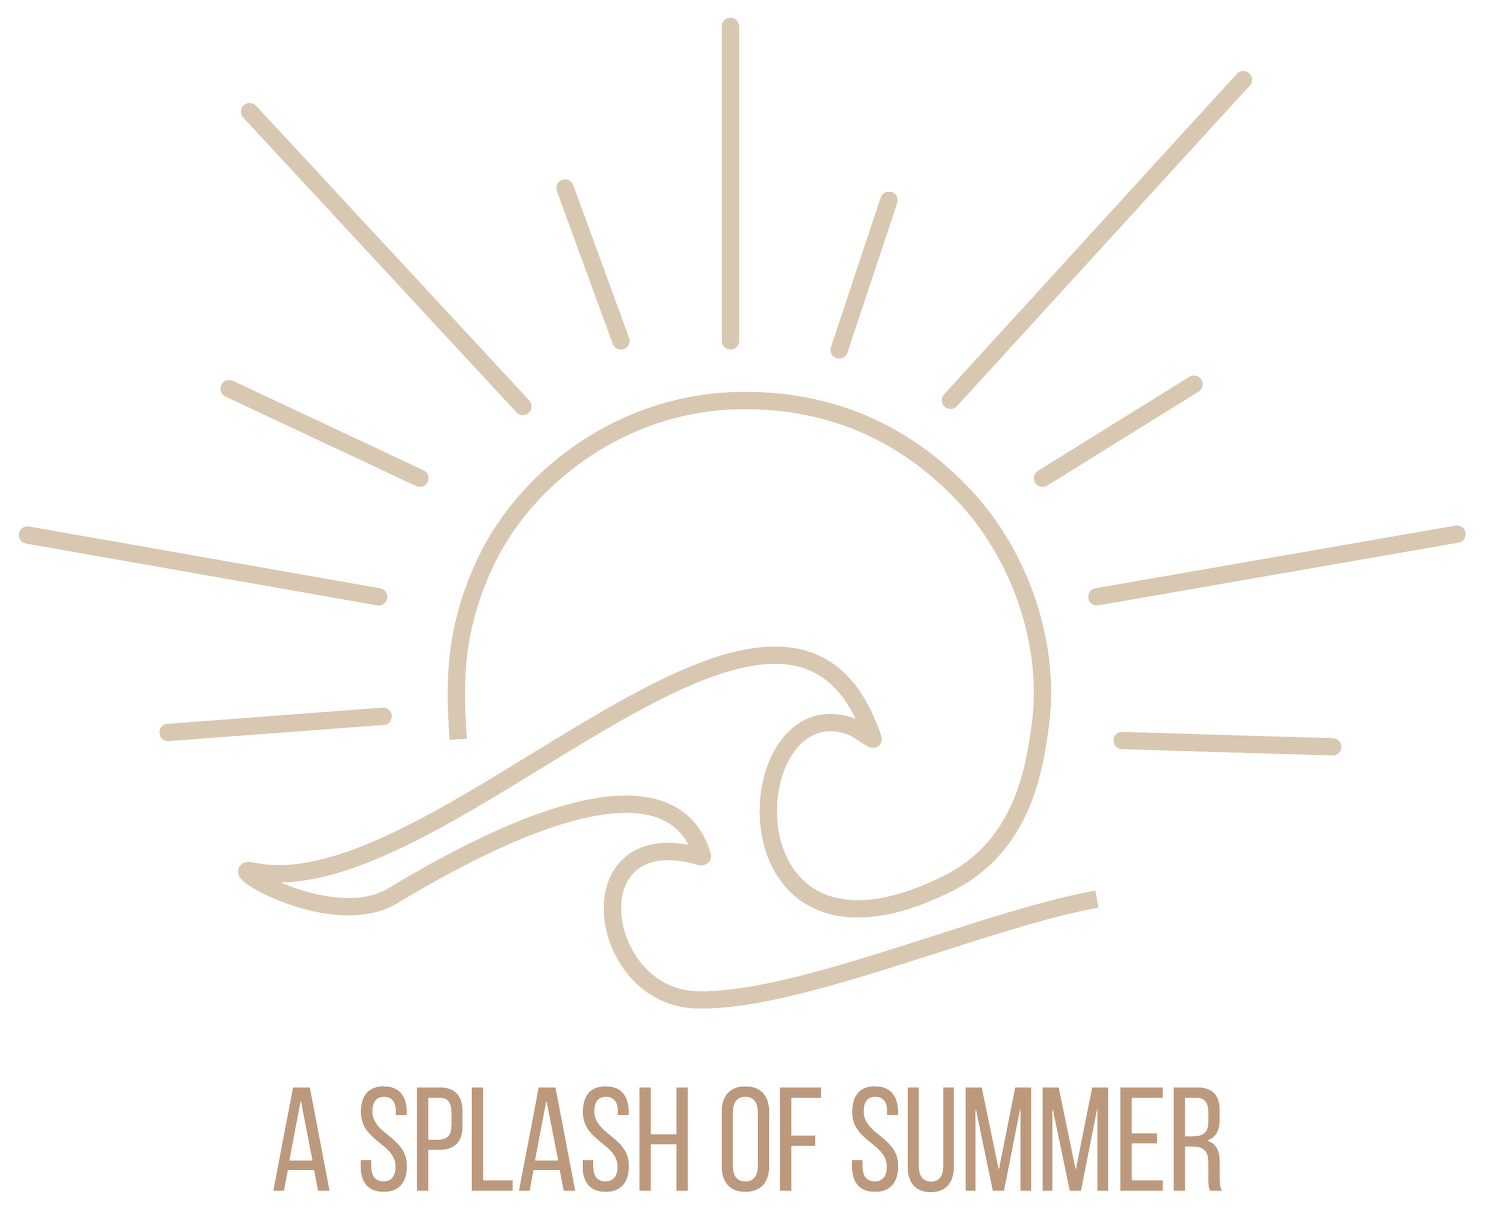 A Splash of Summer